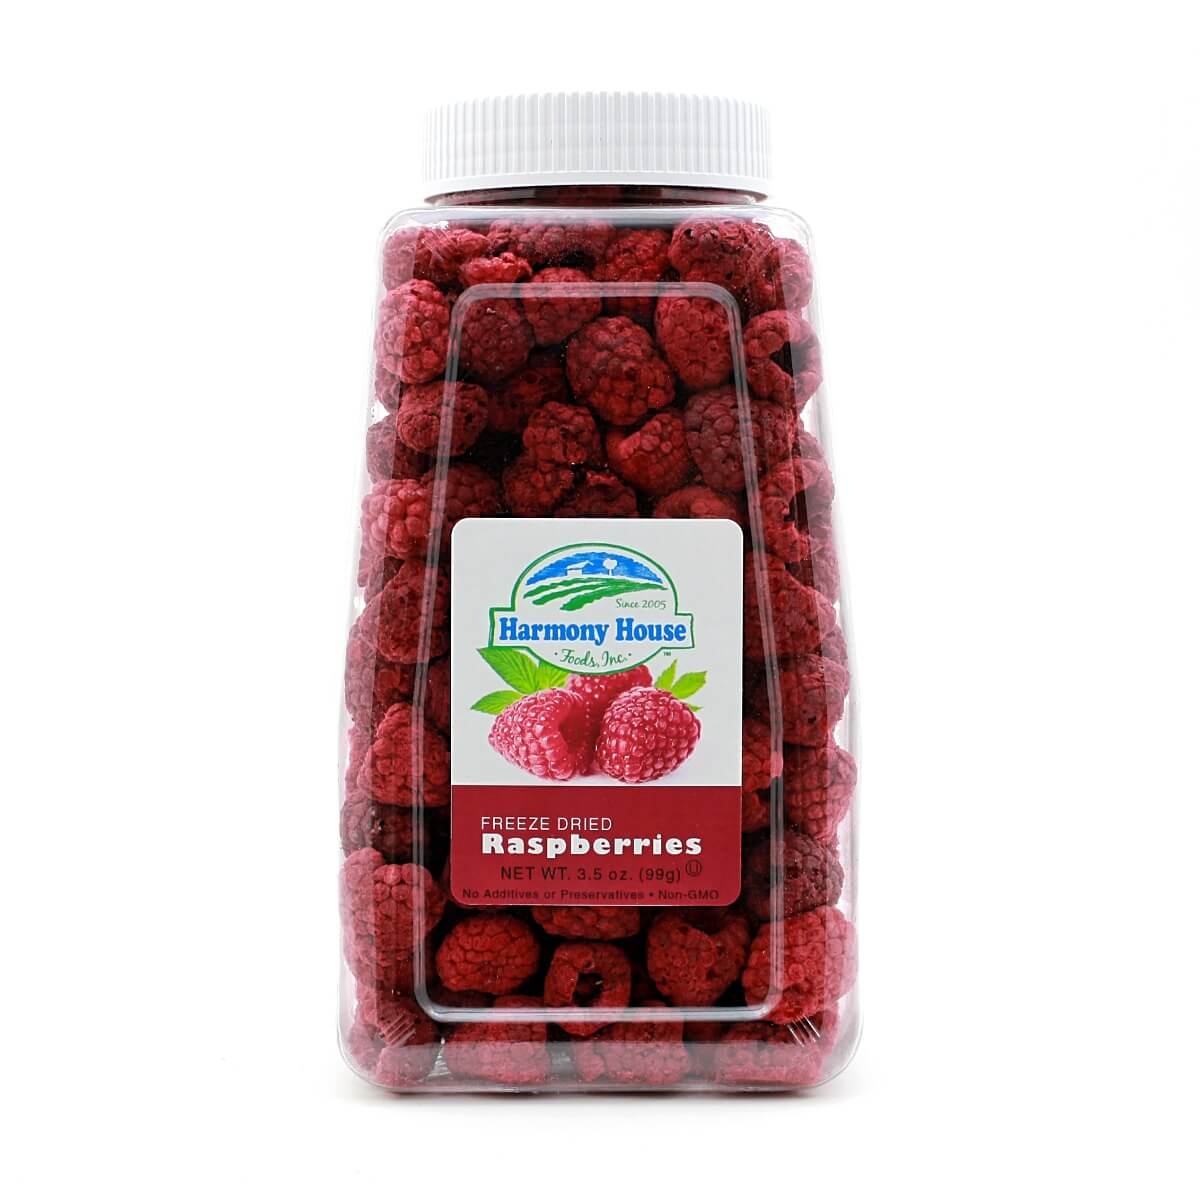 A jar of Harmony House Freeze Dried Raspberries on a white background.